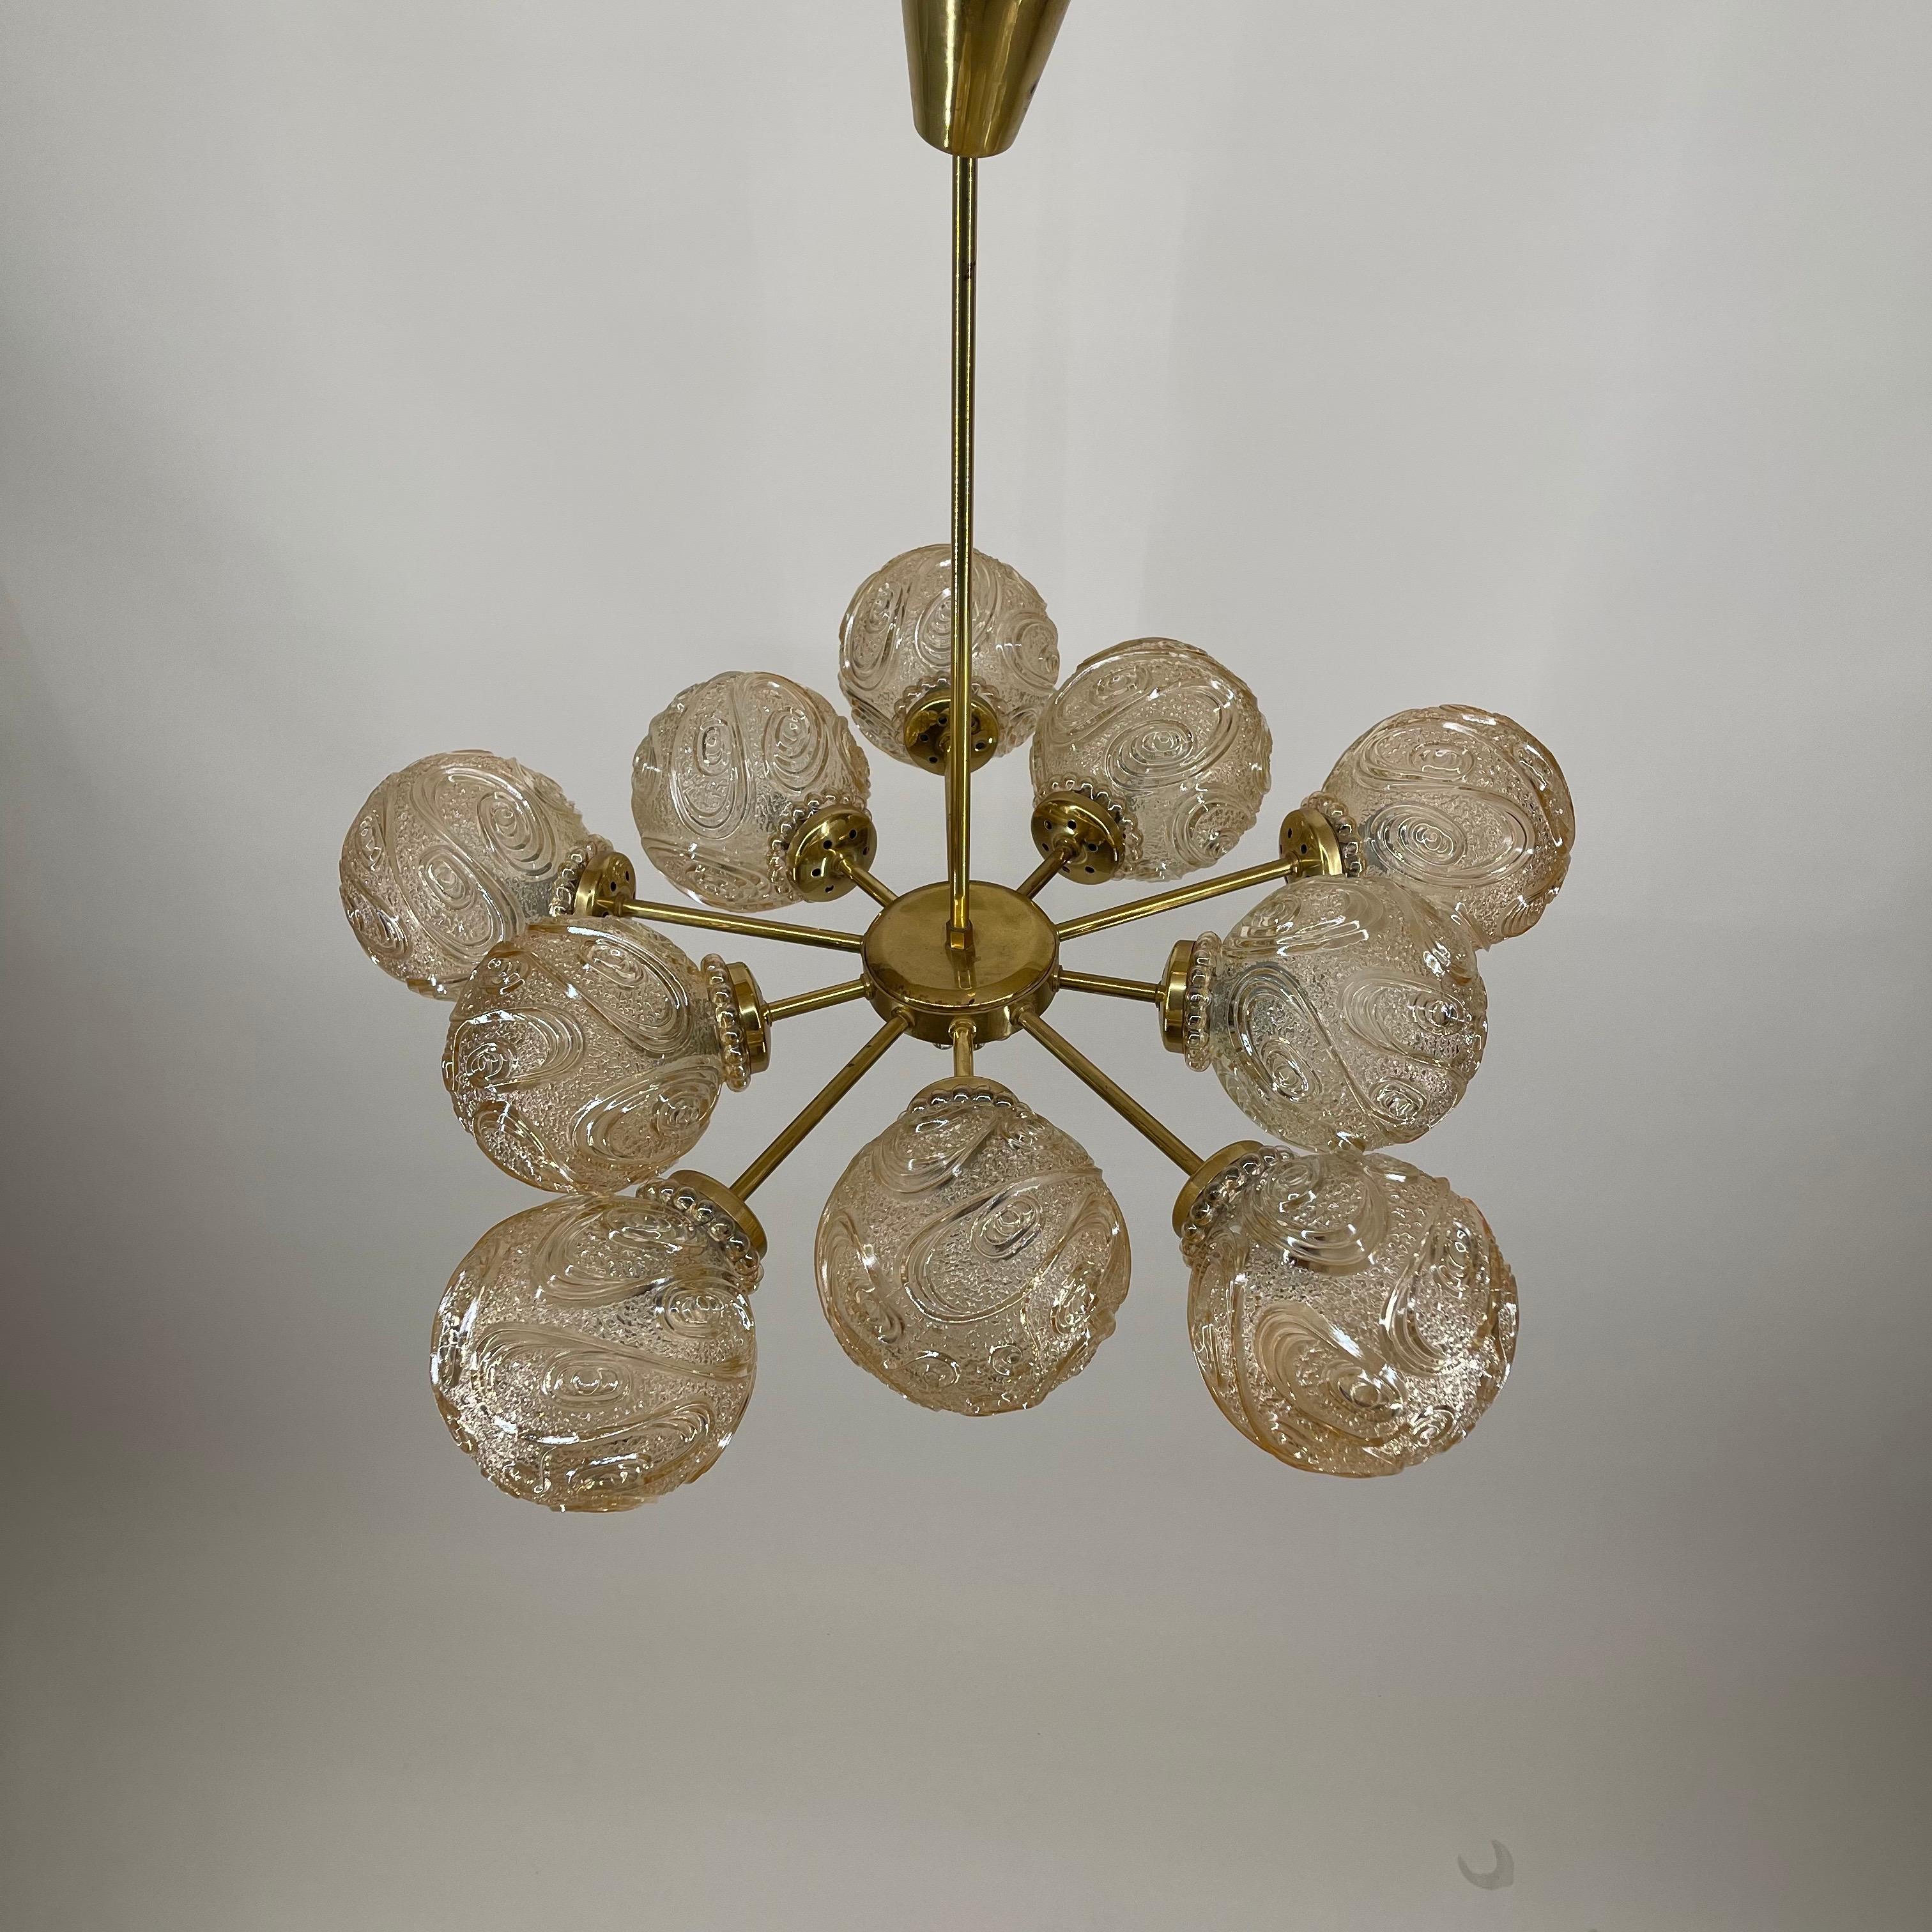 Swirl glass chandelier by Helena Tynell for Glashutte Limburg, Germany 1960s.